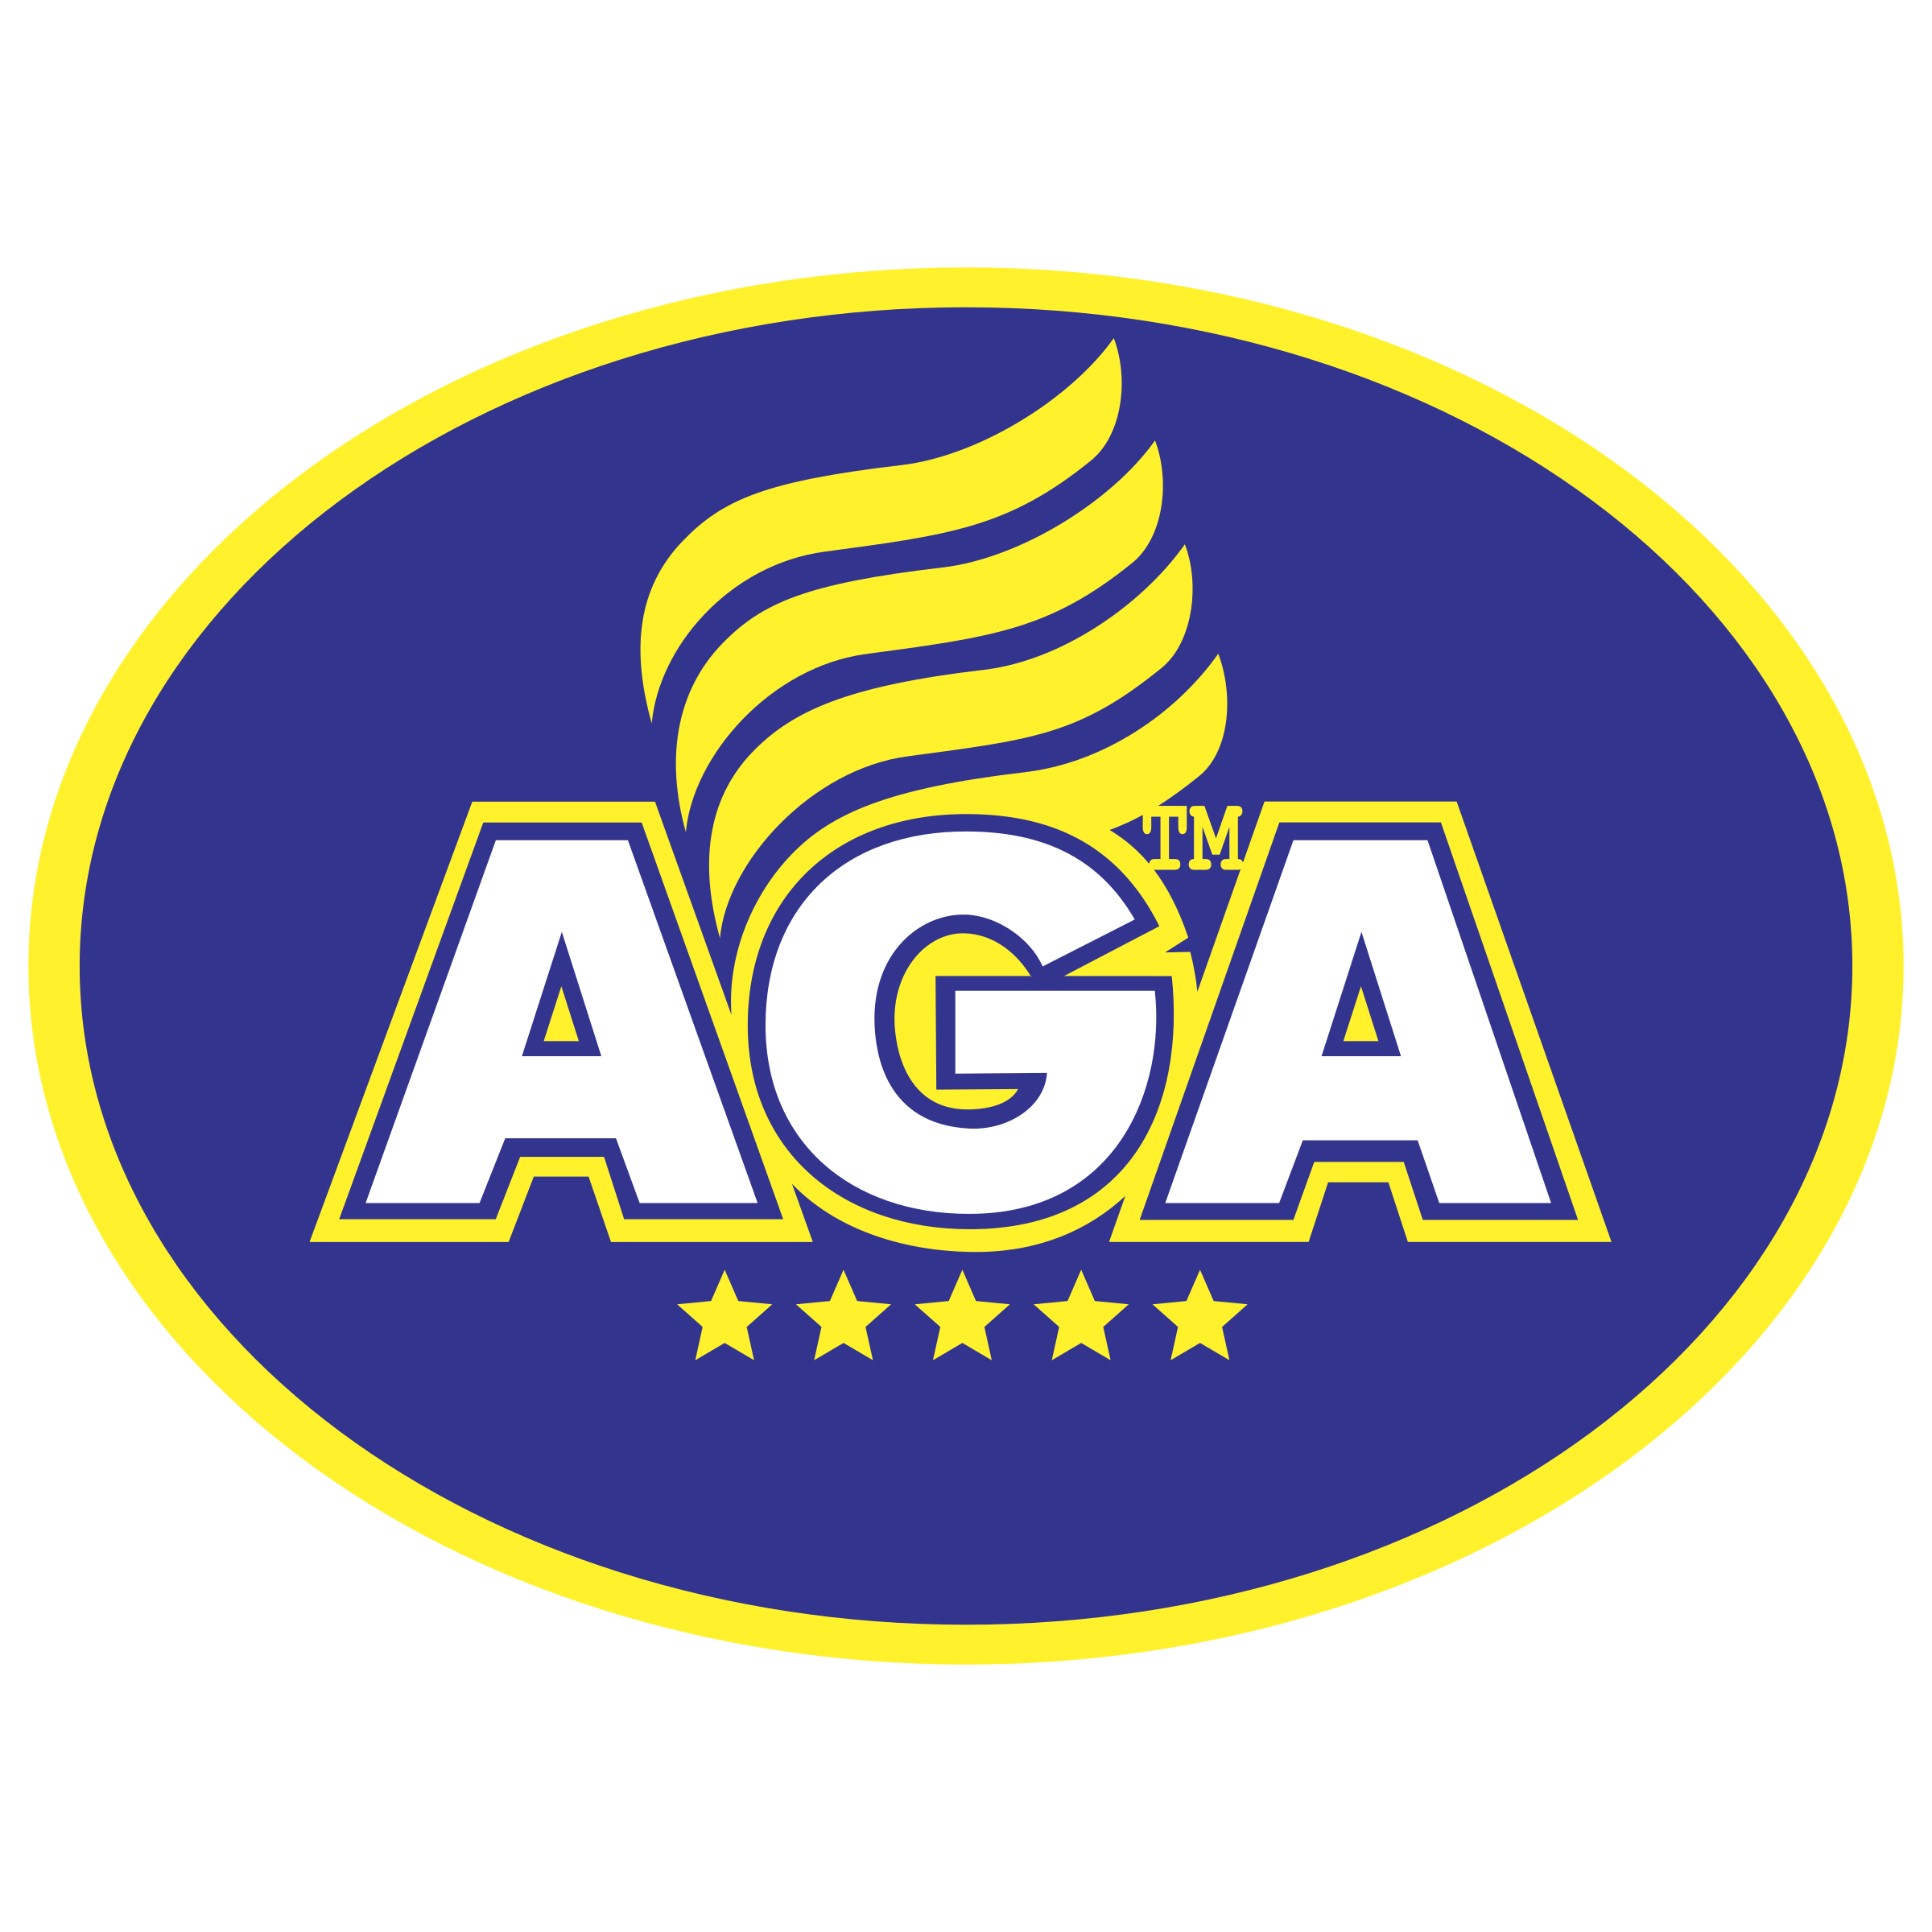 Aga Logo - AGA Logo PNG Transparent & SVG Vector - Freebie Supply